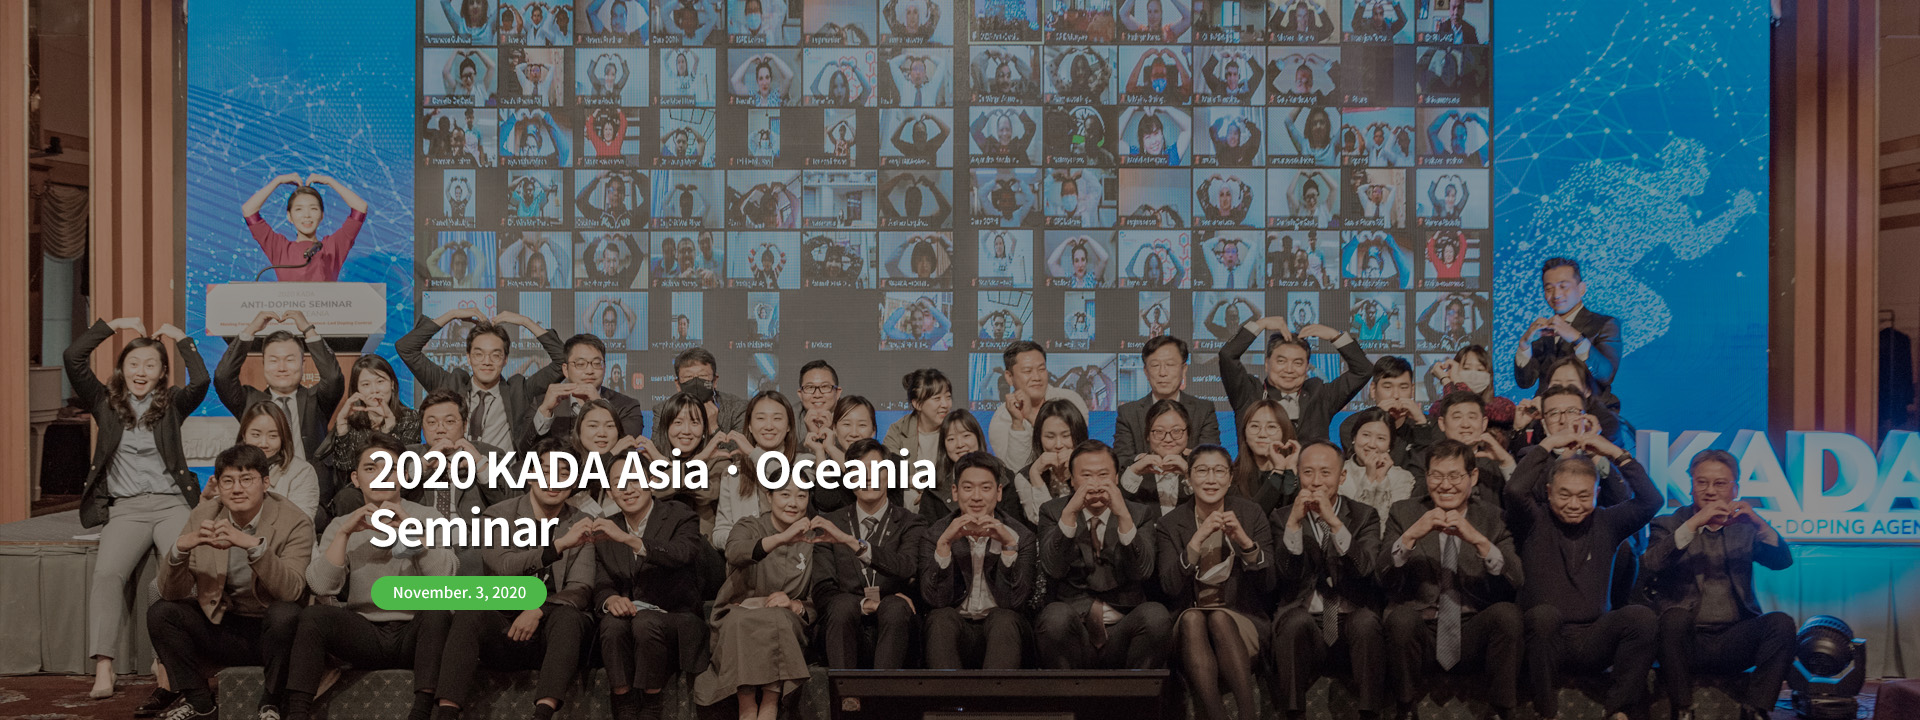 2020 KADA Asia Oceania Seminar